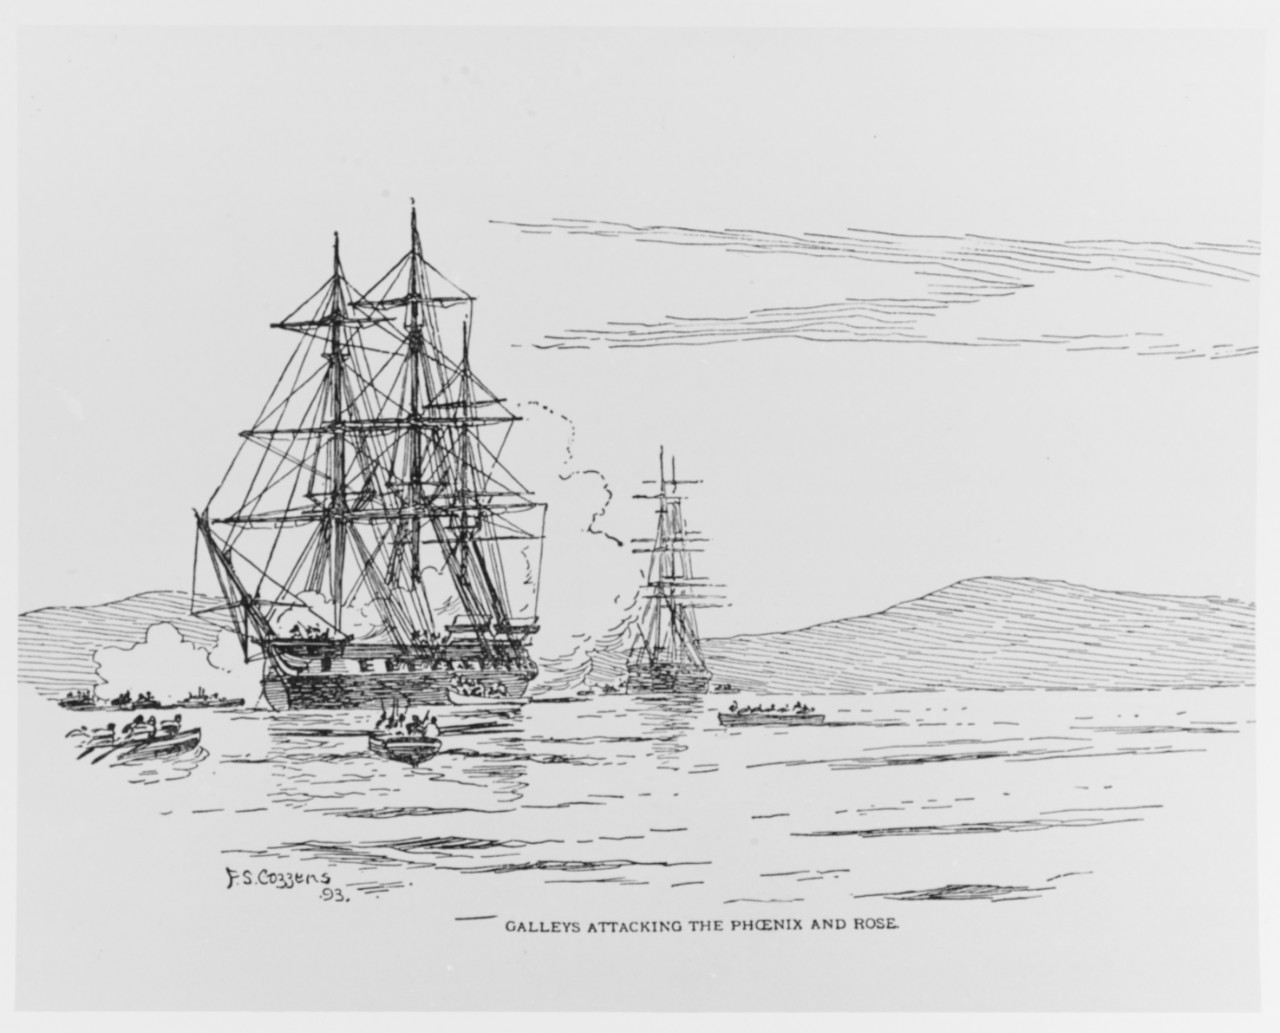 HMS PHOENIX and HMS ROSE